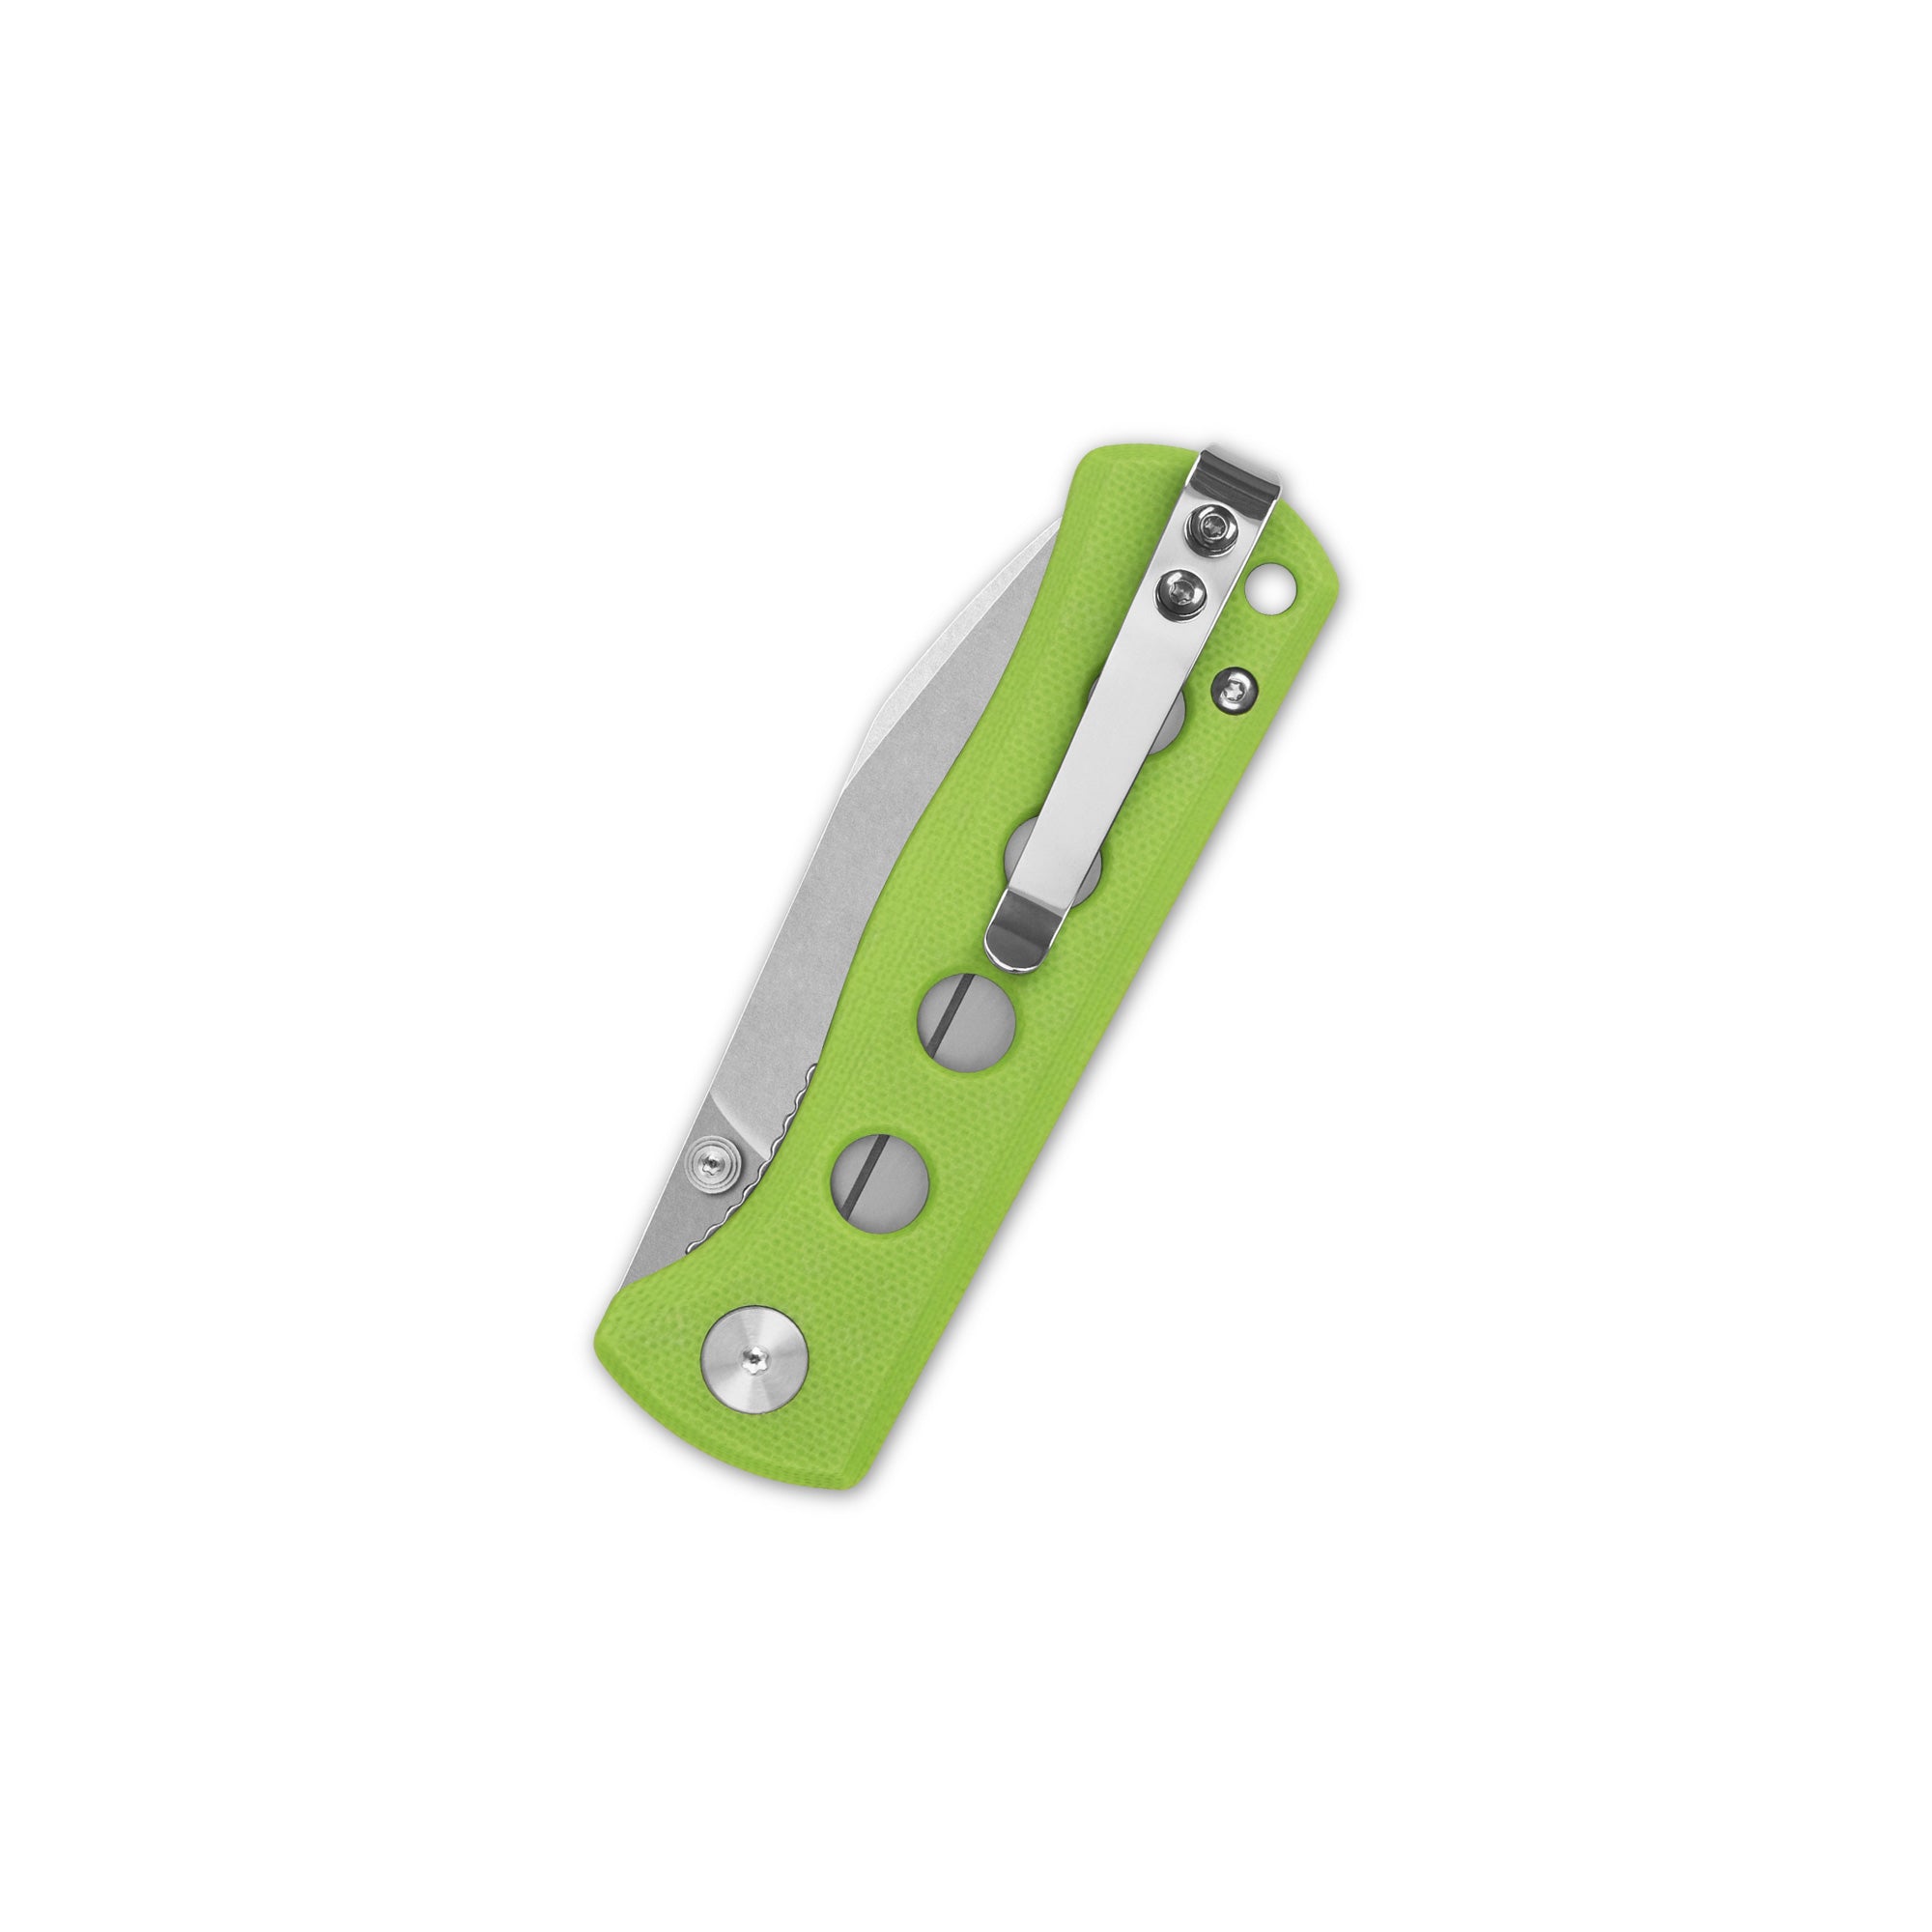 QSP Canary Folder Liner Lock Pocket Knife 14C28N Blade Neon G10 